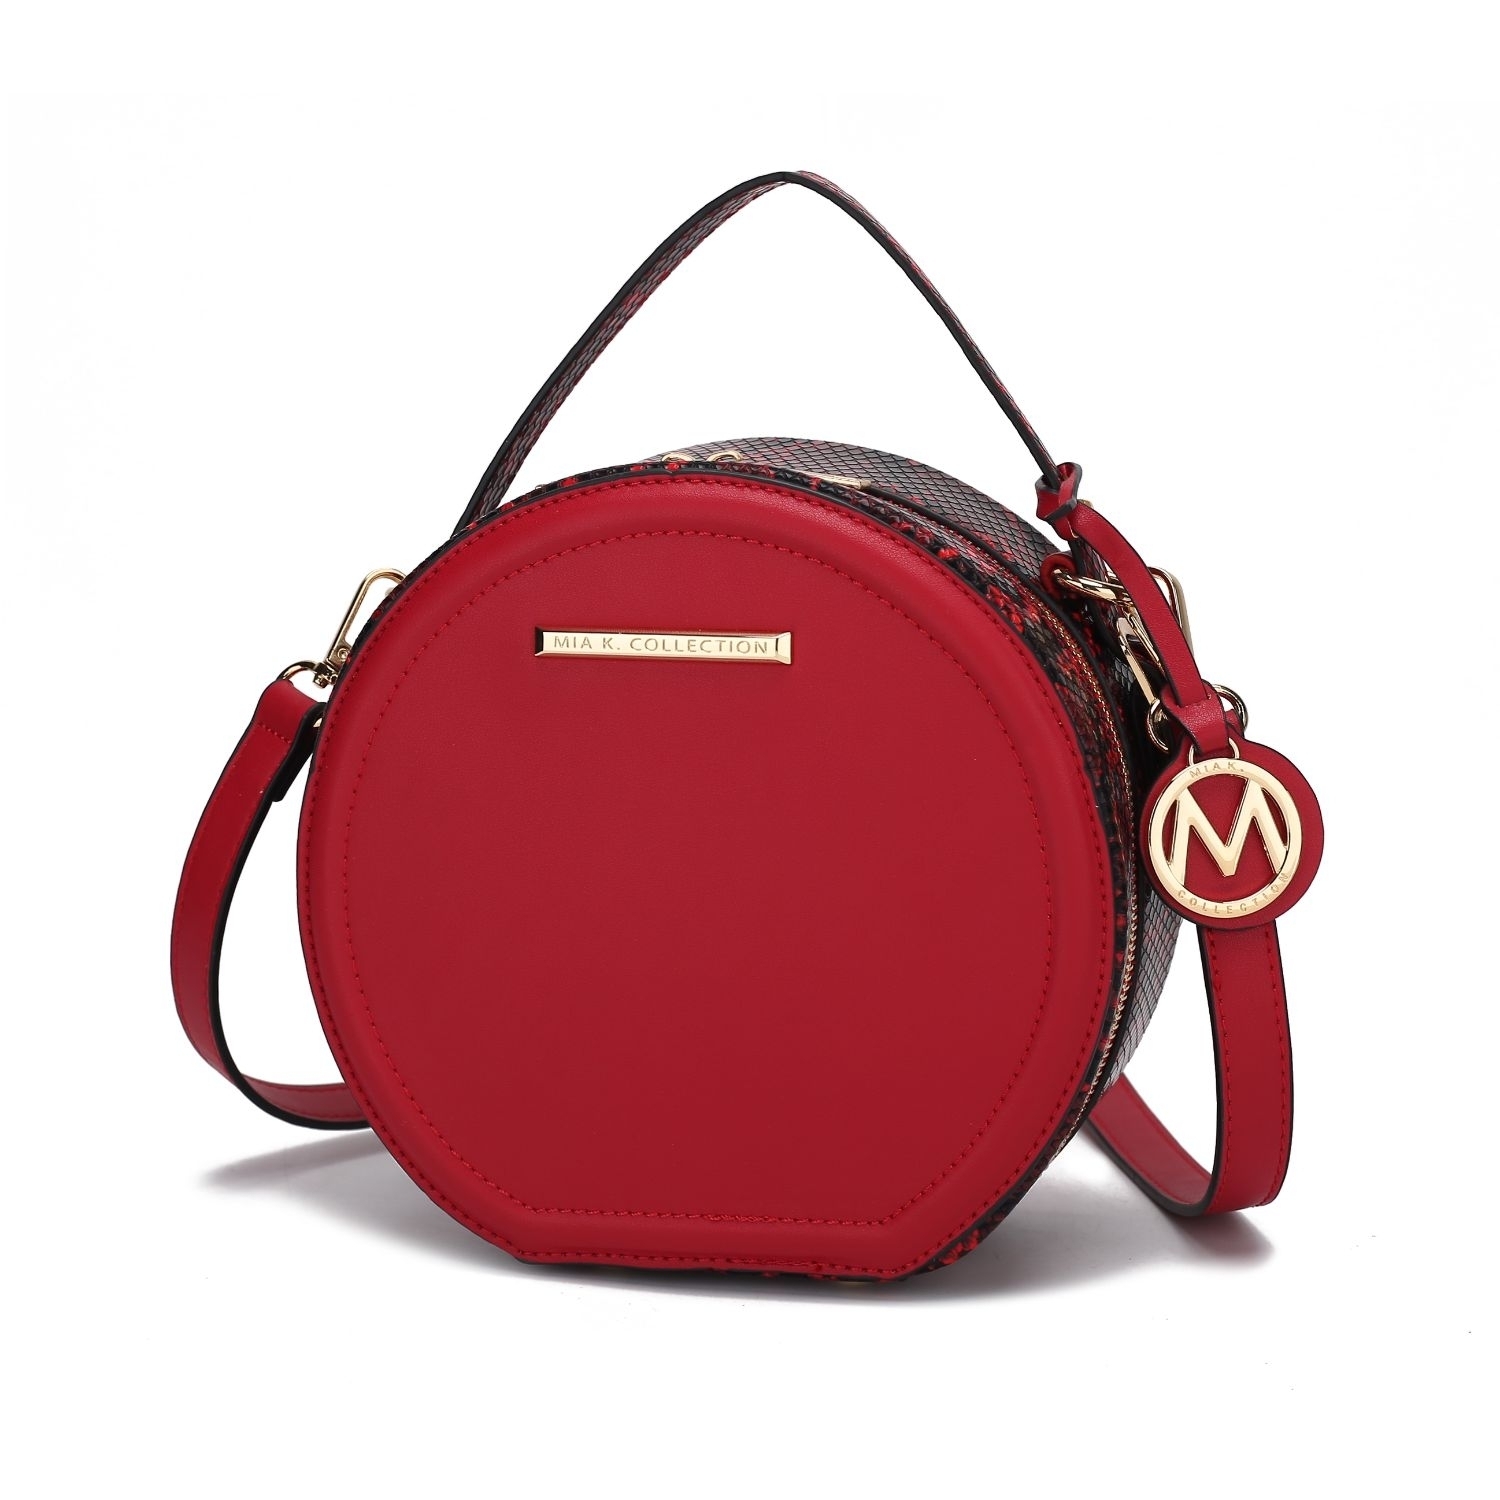 MKF Collection Mallory Handbag Crossbody By Mia K. - Red